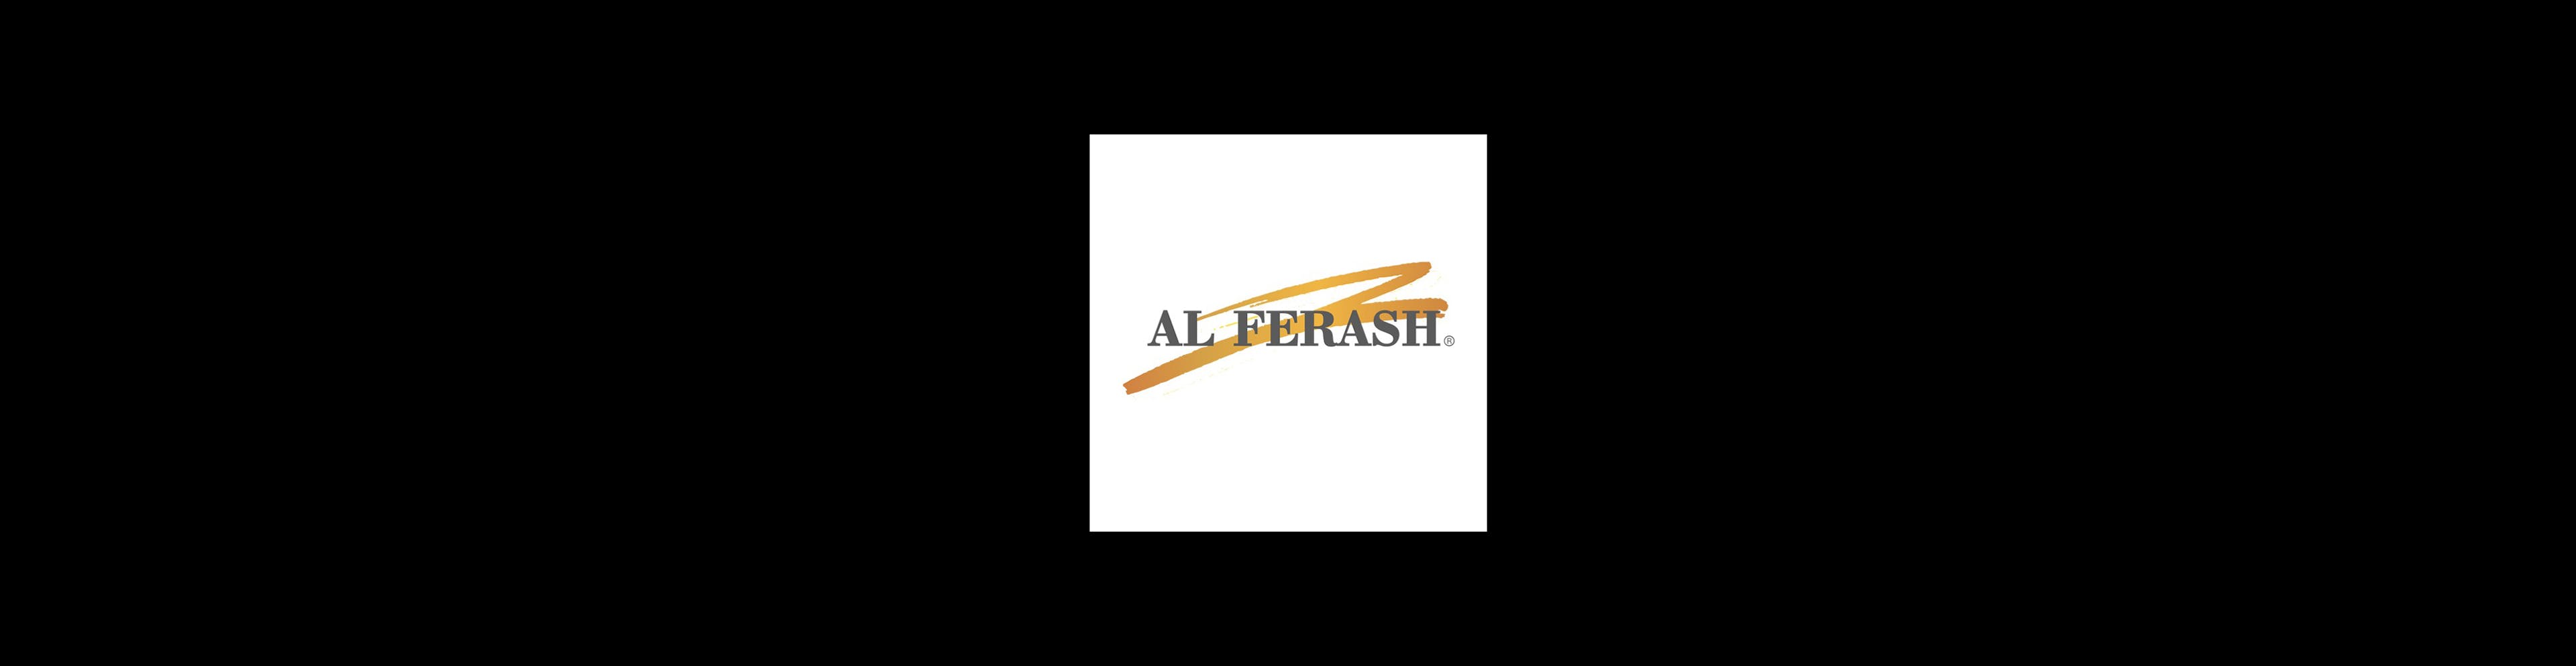 AL-Ferash